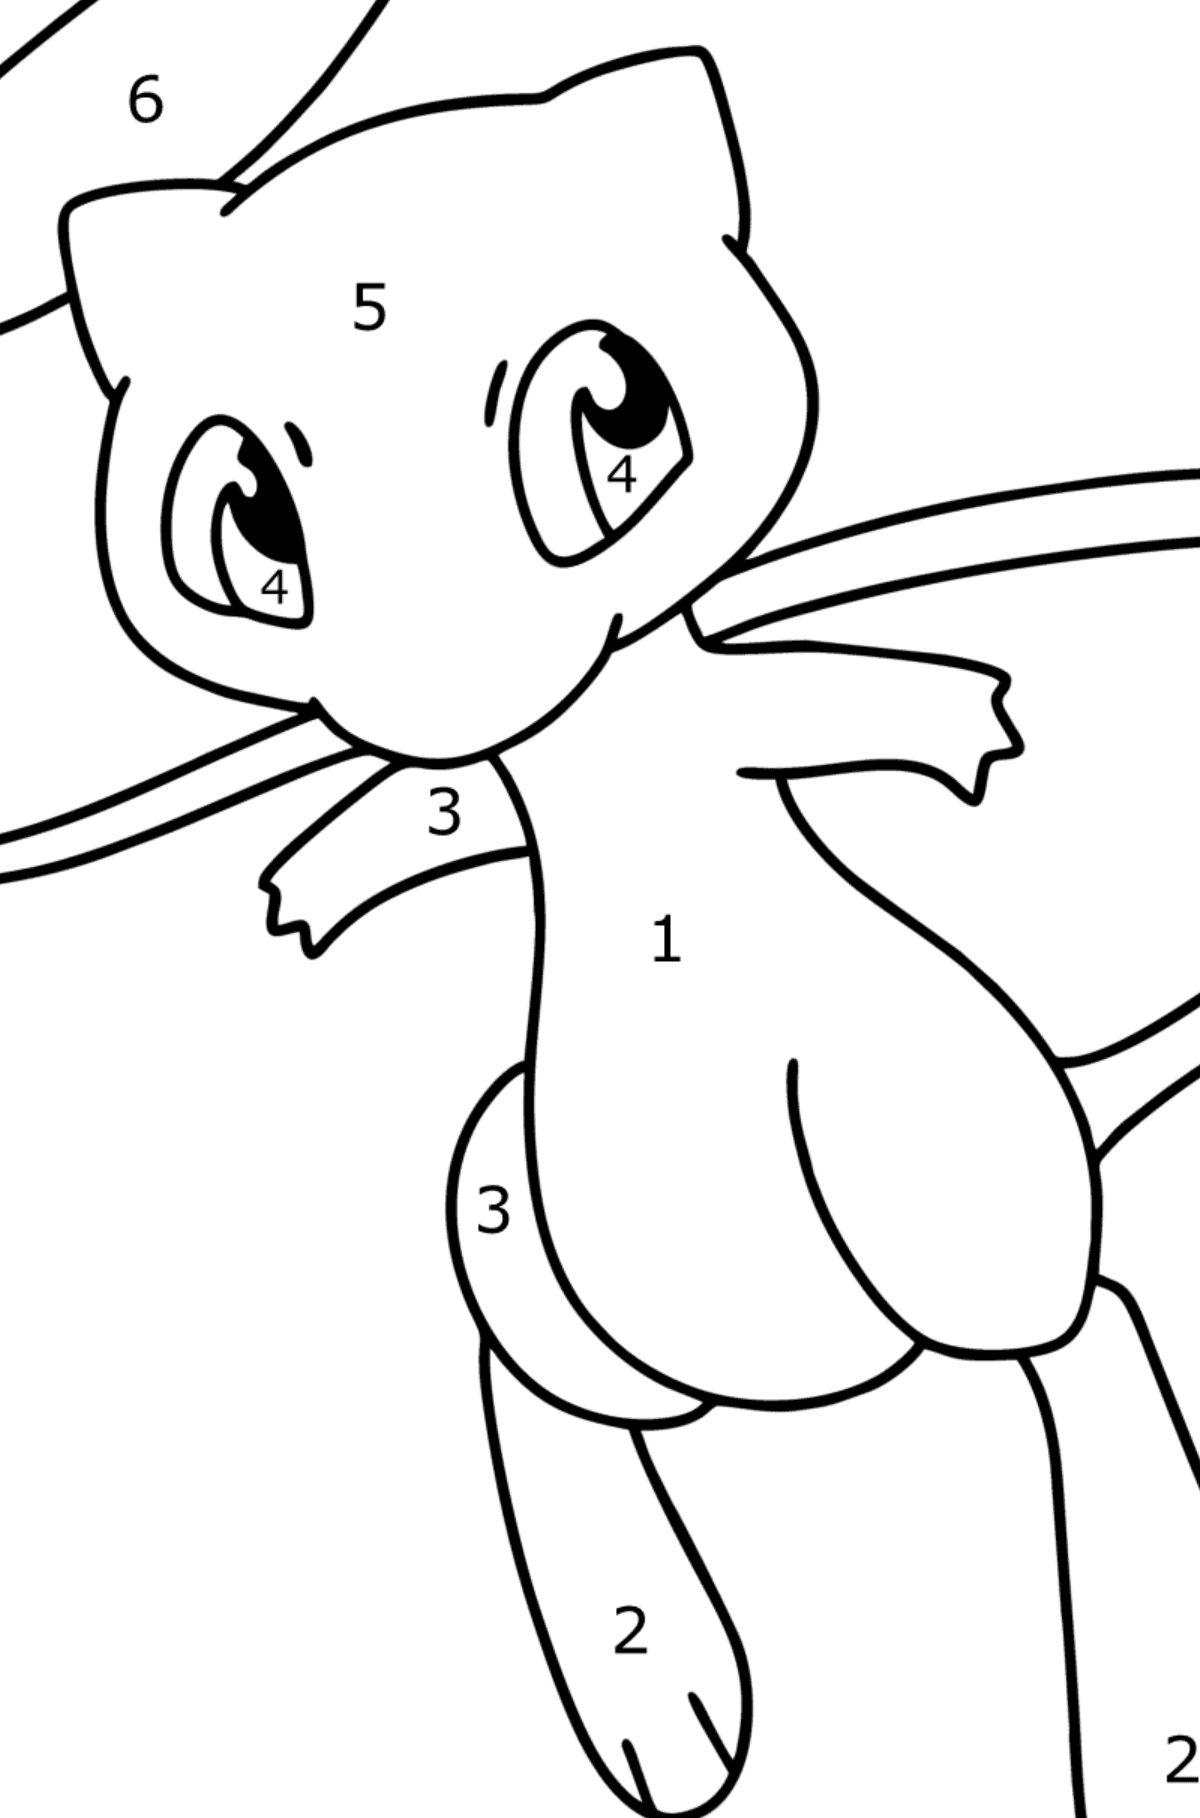 Desenho de Pokemon Go Mew para colorir